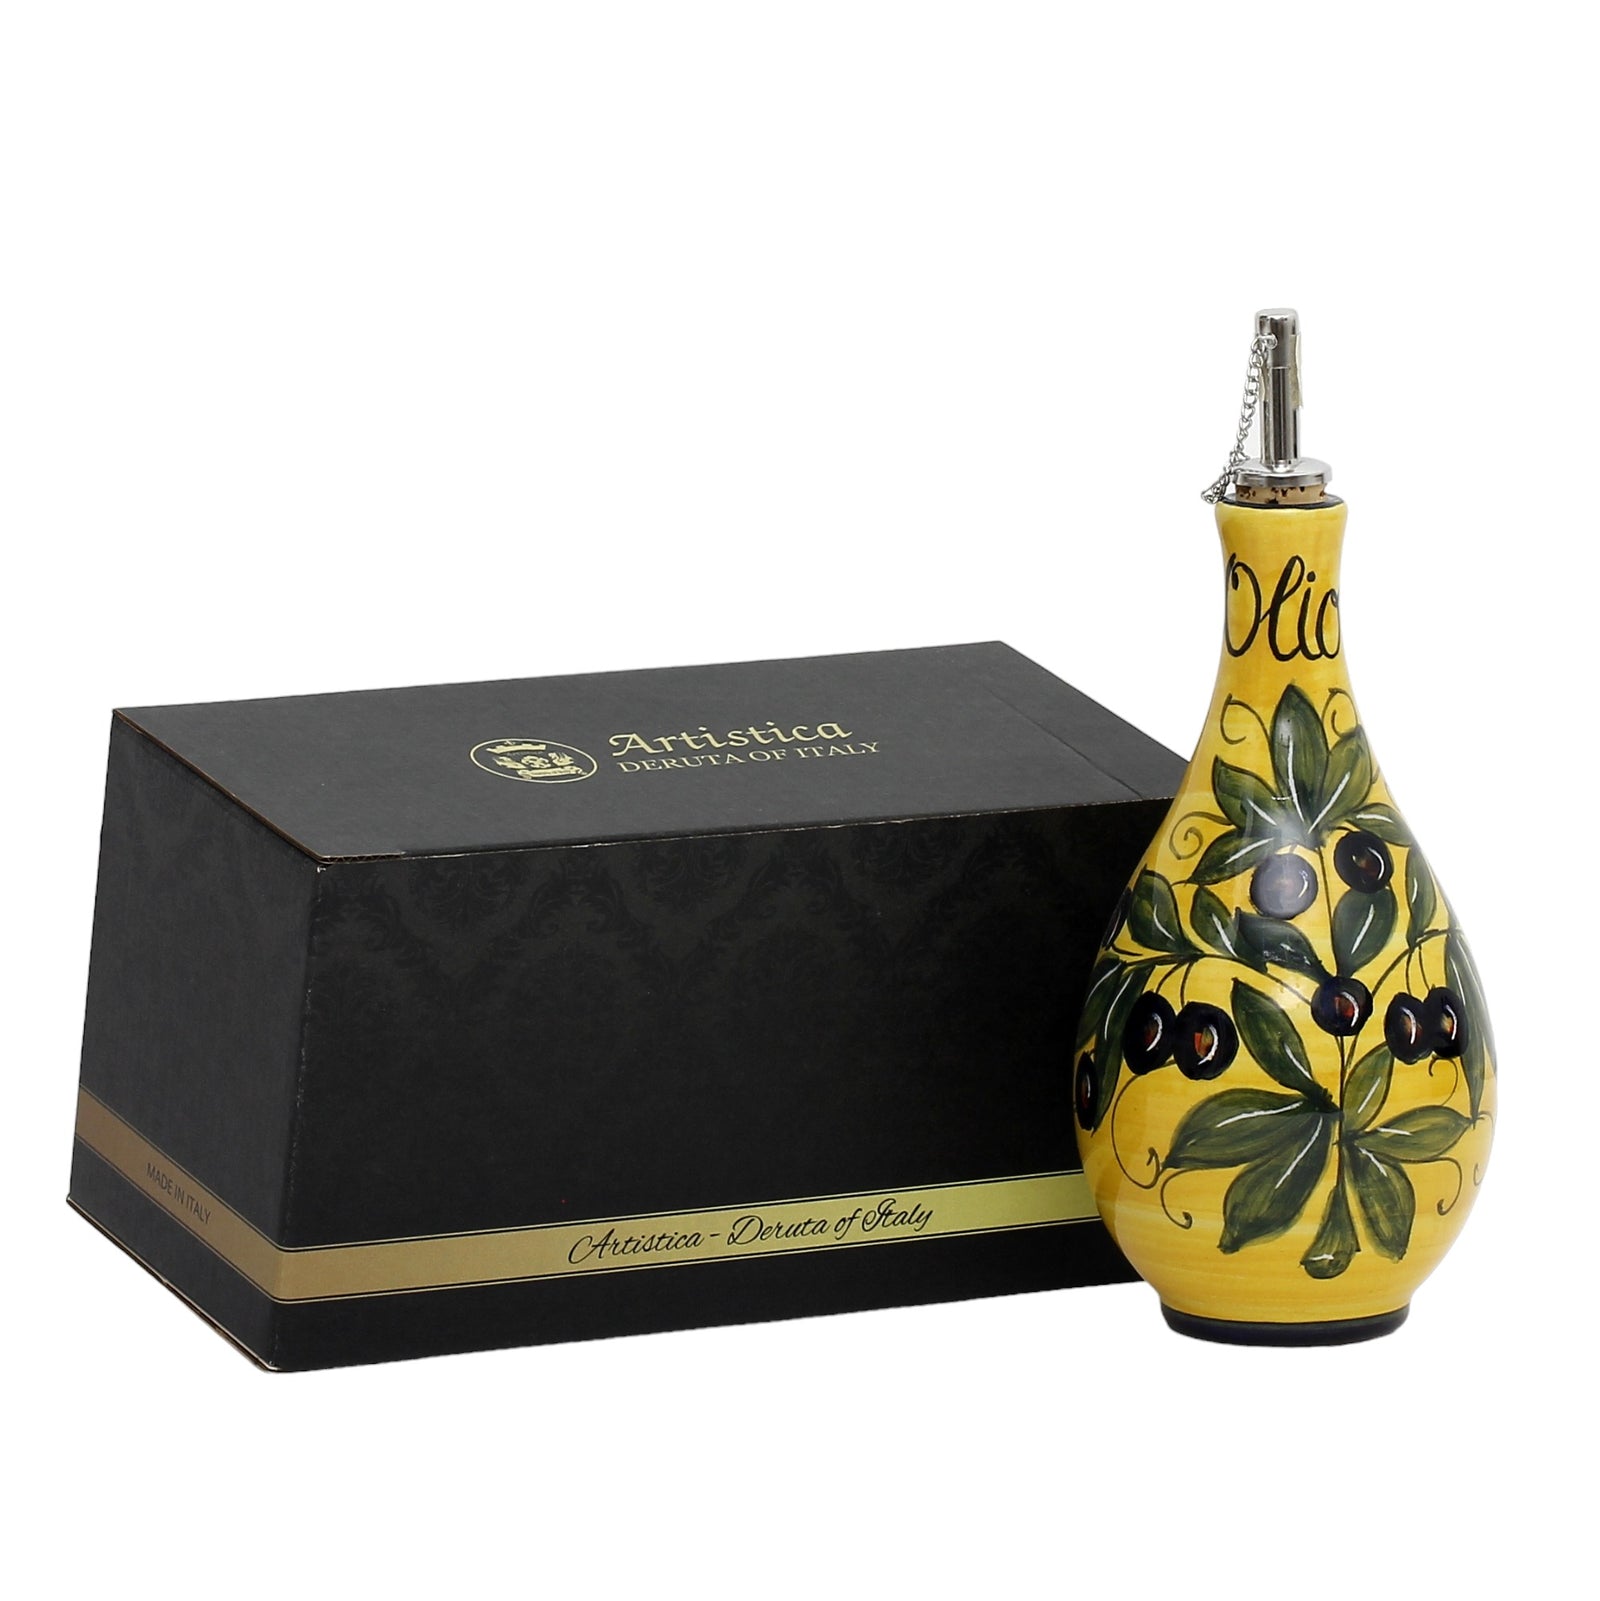 GIFT BOX: With authentic Deruta hand painted ceramic - 'OLIO' Bottle Dispenser Olive Fondo Giallo design